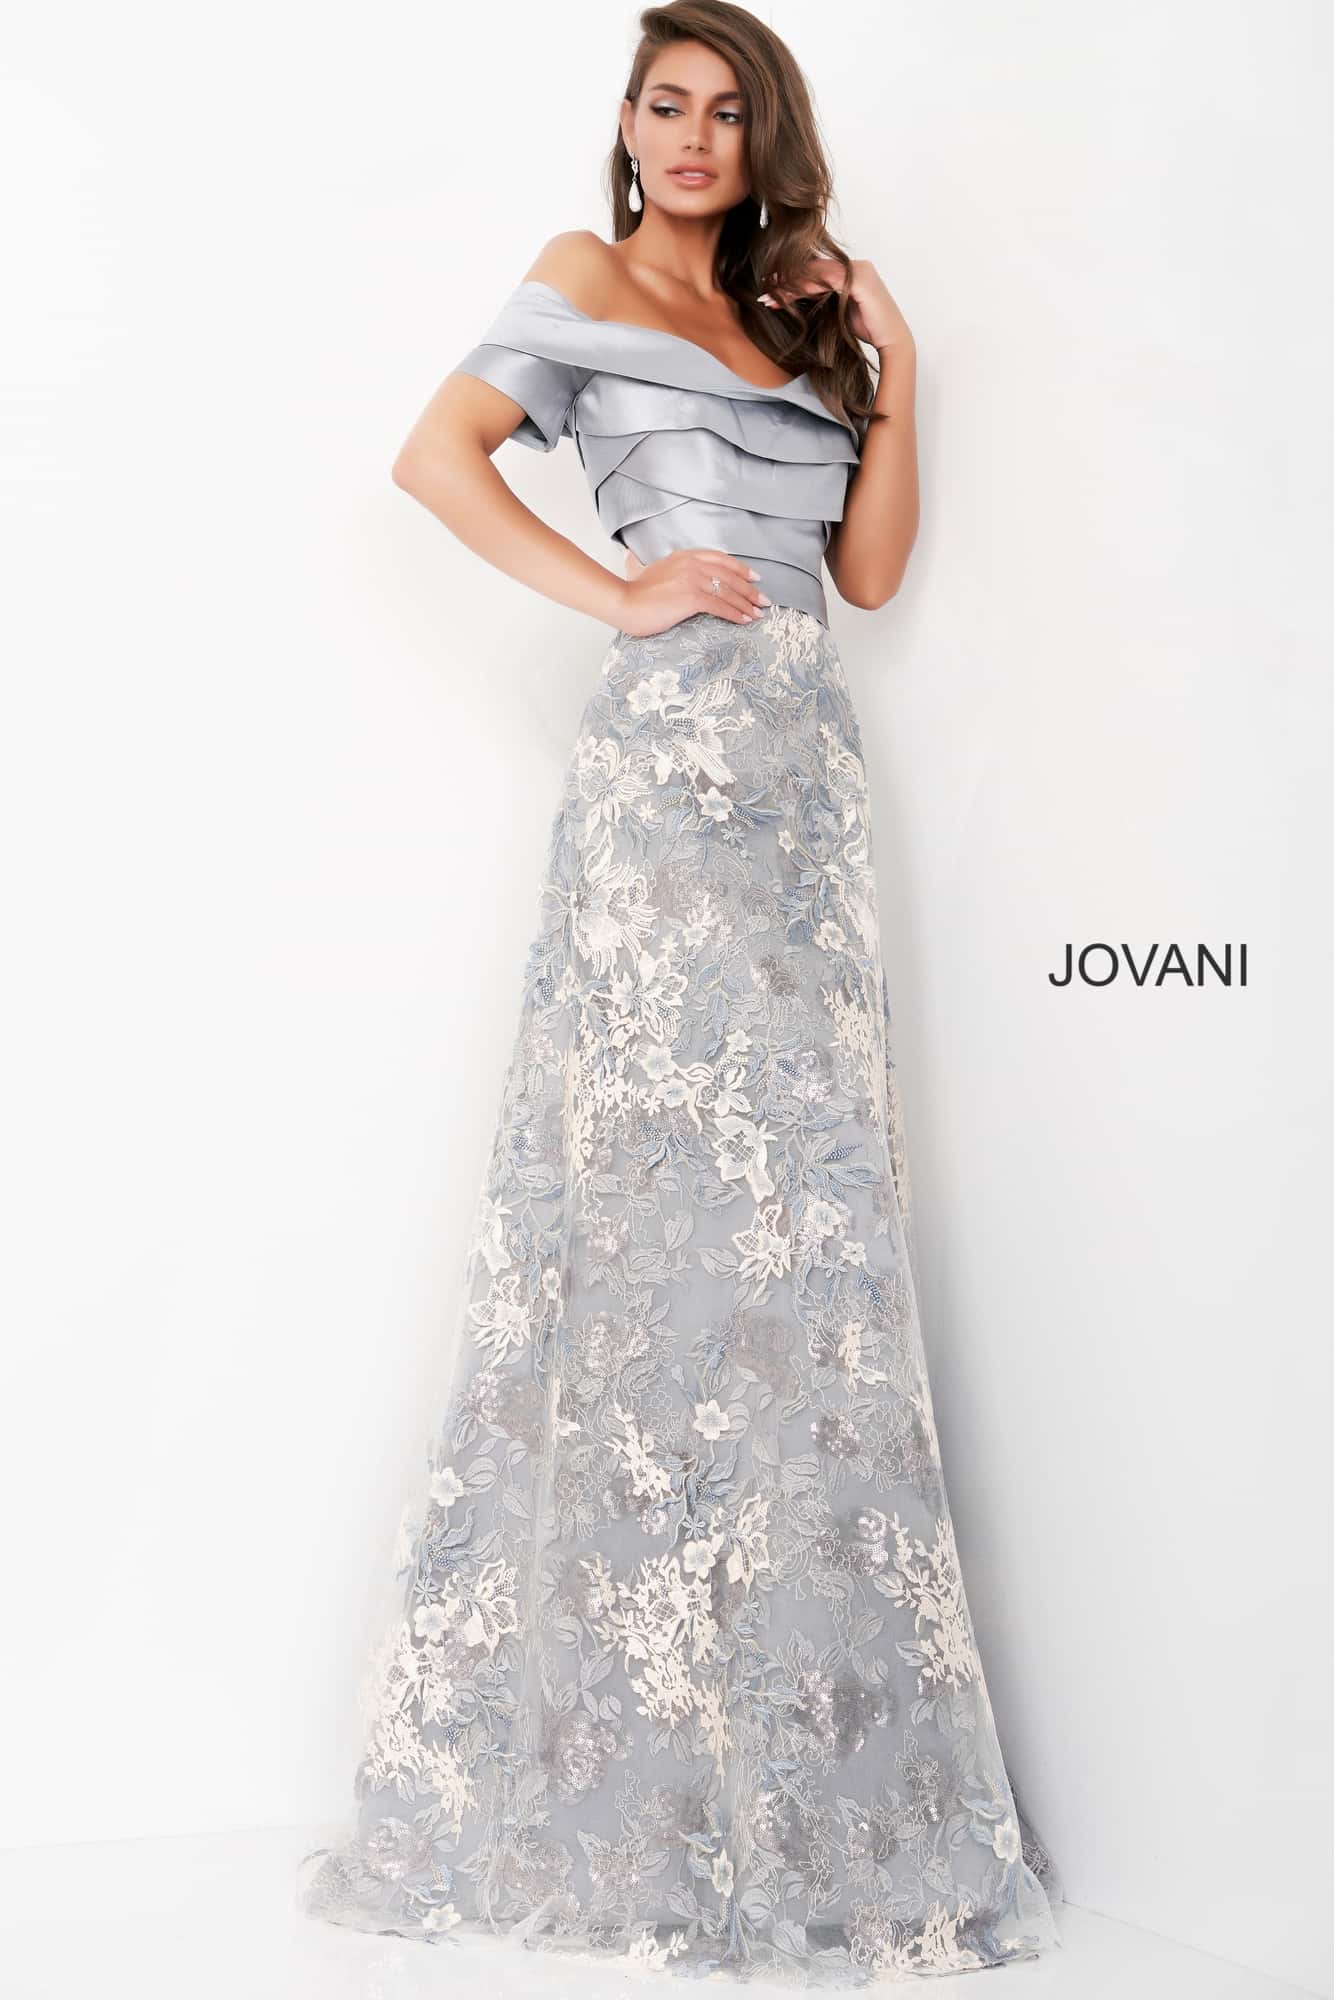 Jovani 02921 Grey Multi A Line Short Sleeve Mother of the Bride Dress